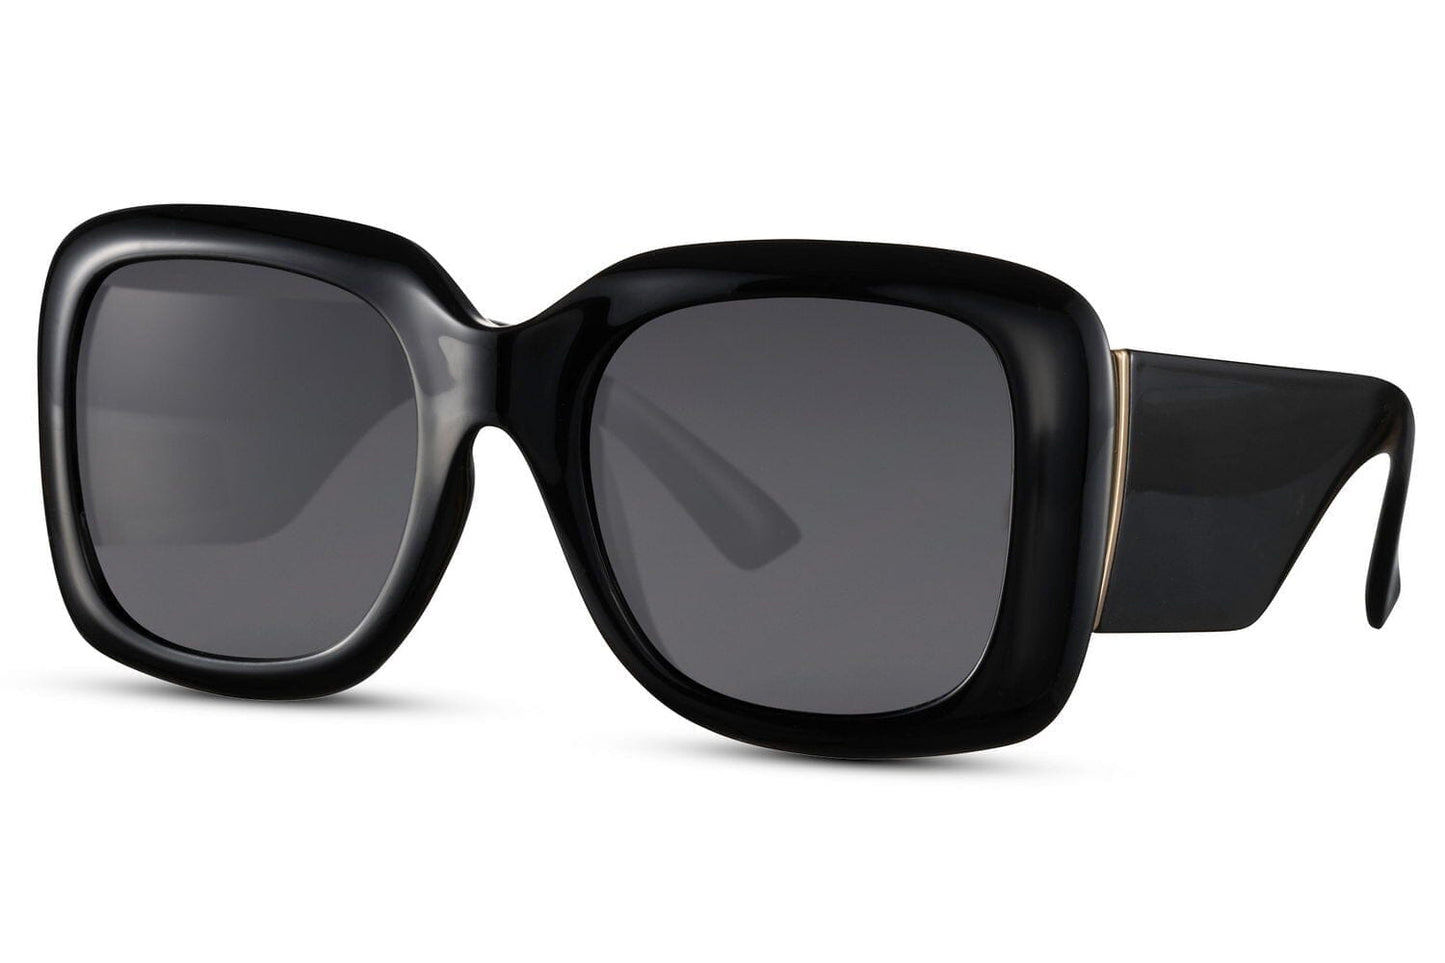 Black acrylic frame glasses. UV400 protected. Black acetate frames.